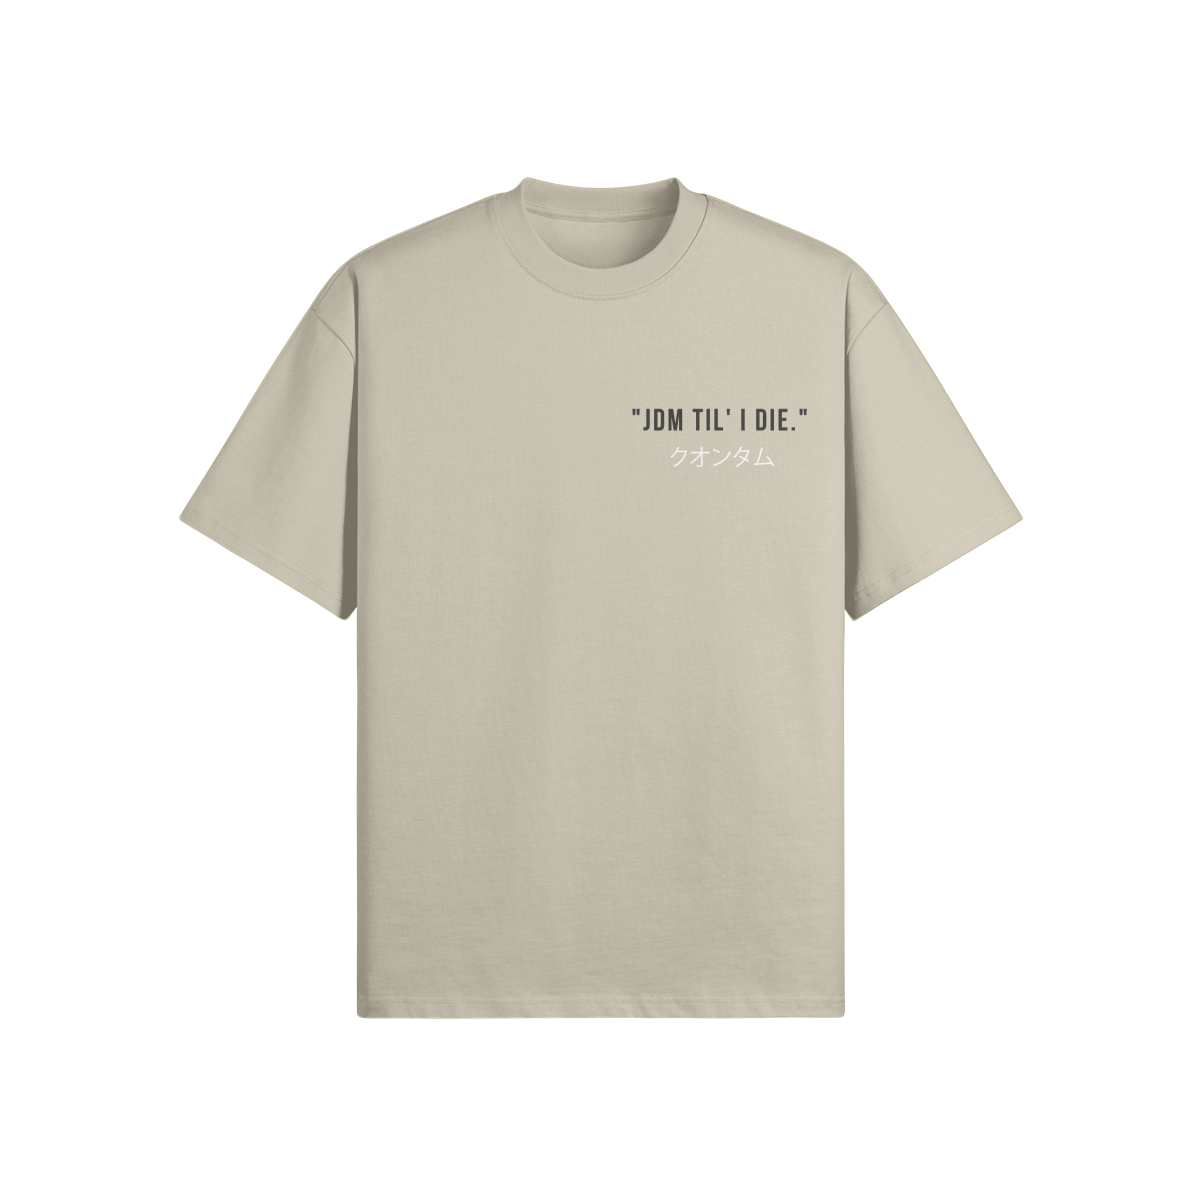 "JDM Til' I Die." 425gsm Oversized/Heavyweight t-shirt